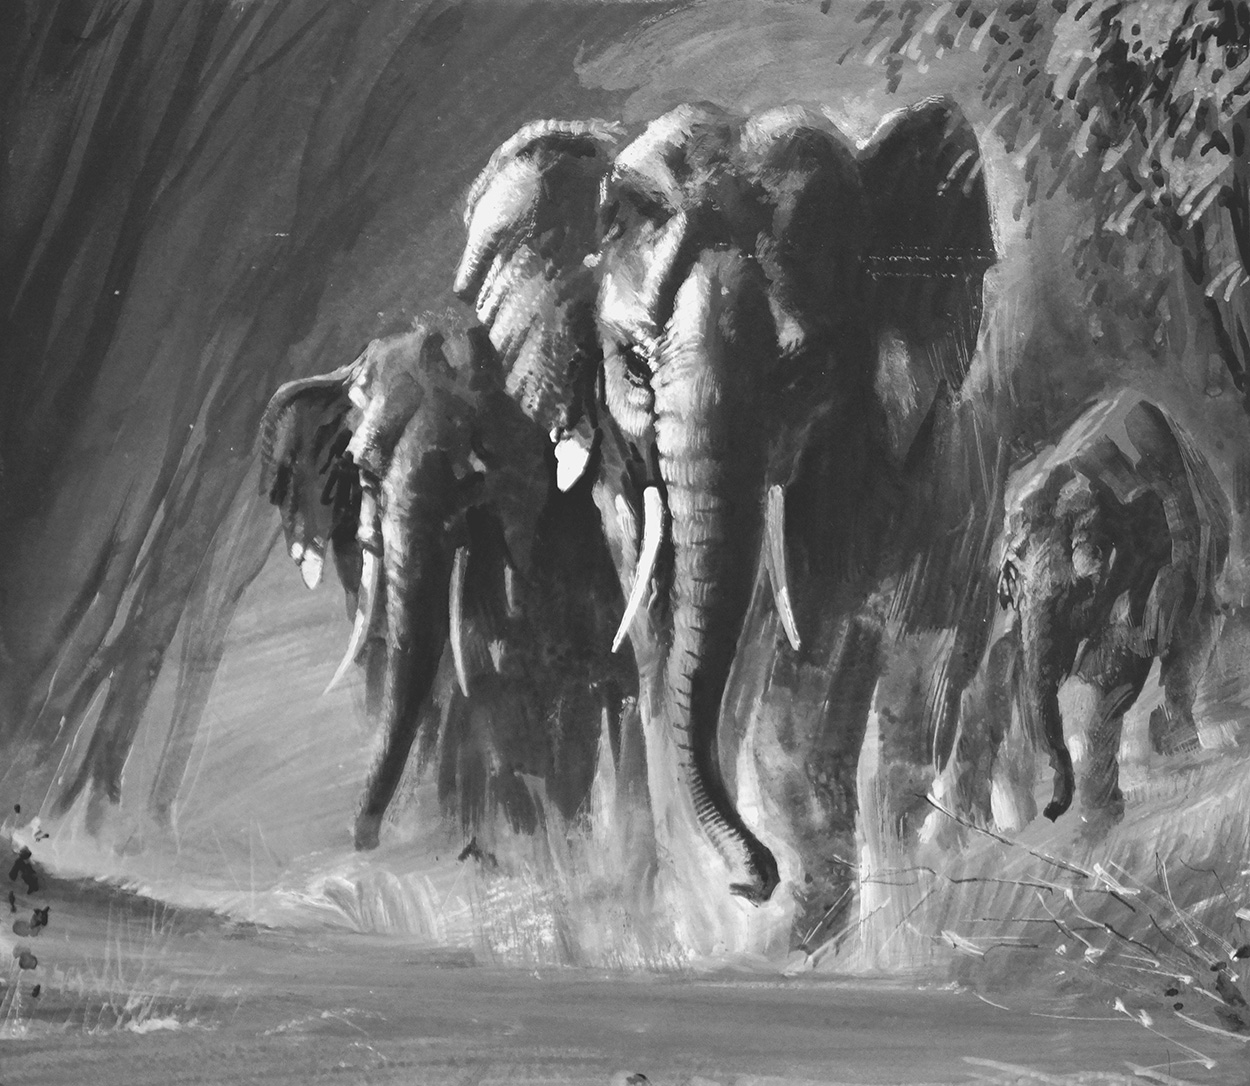 Elephants on Parade (Original) art by Graham Coton at The Illustration Art Gallery